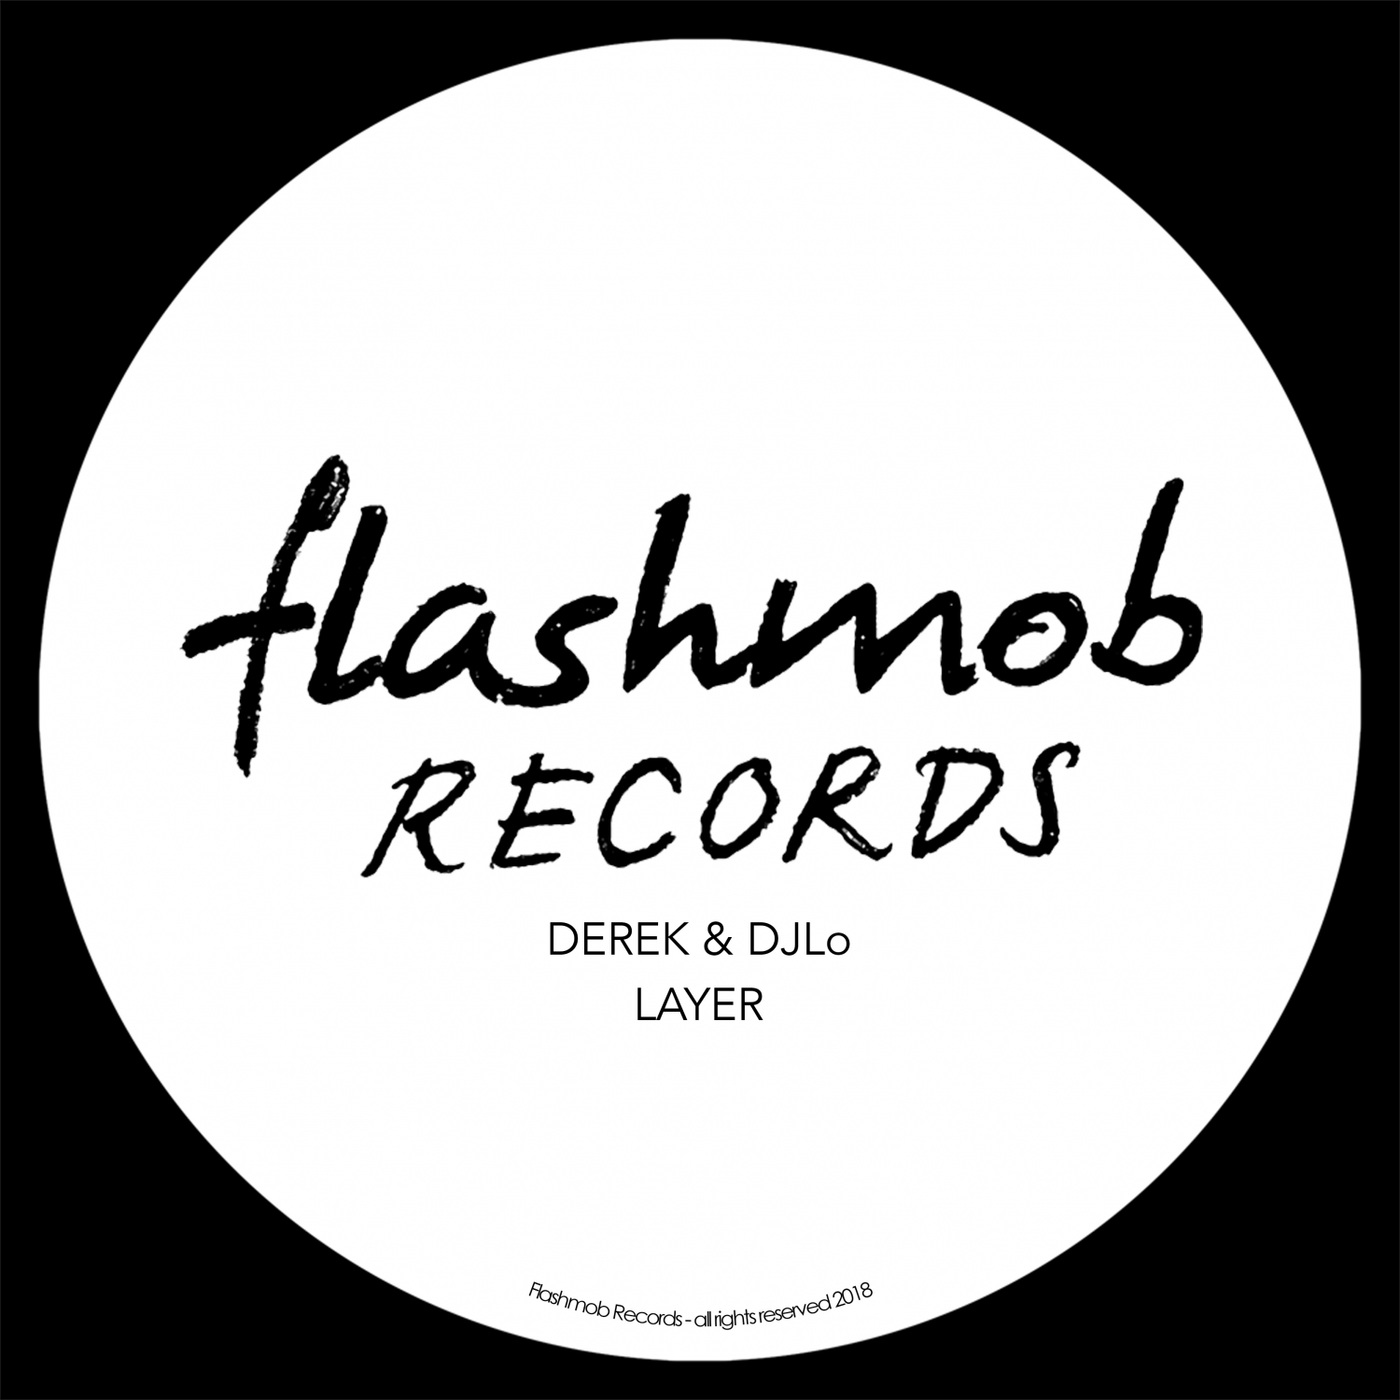 Derek & DJLo - Layer / Flashmob Records